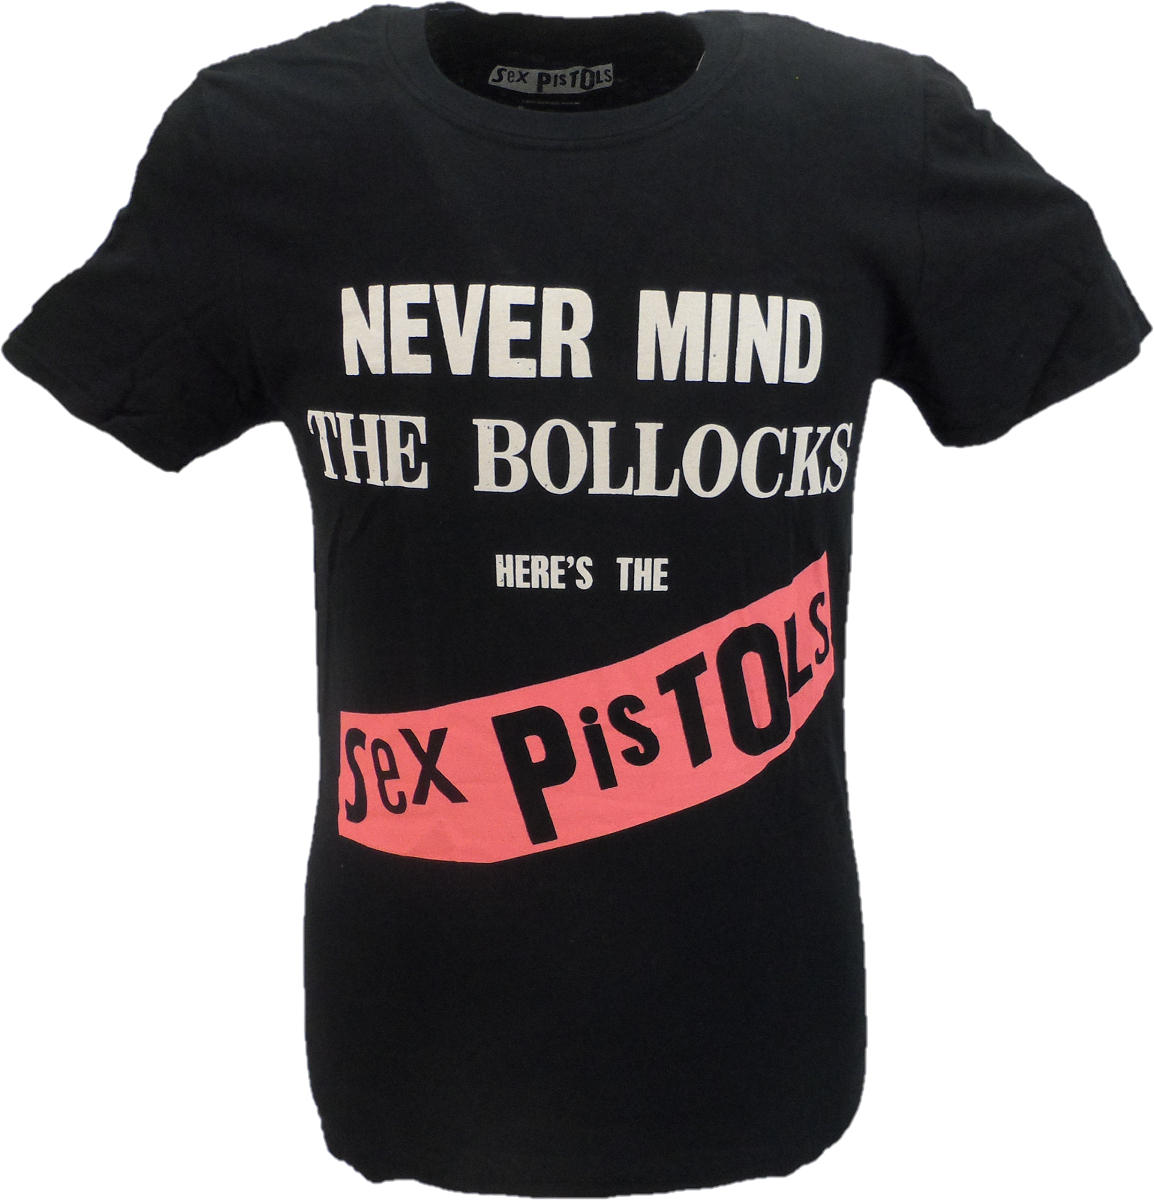 Mens Black Official Sex Pistols NMTB T Shirt